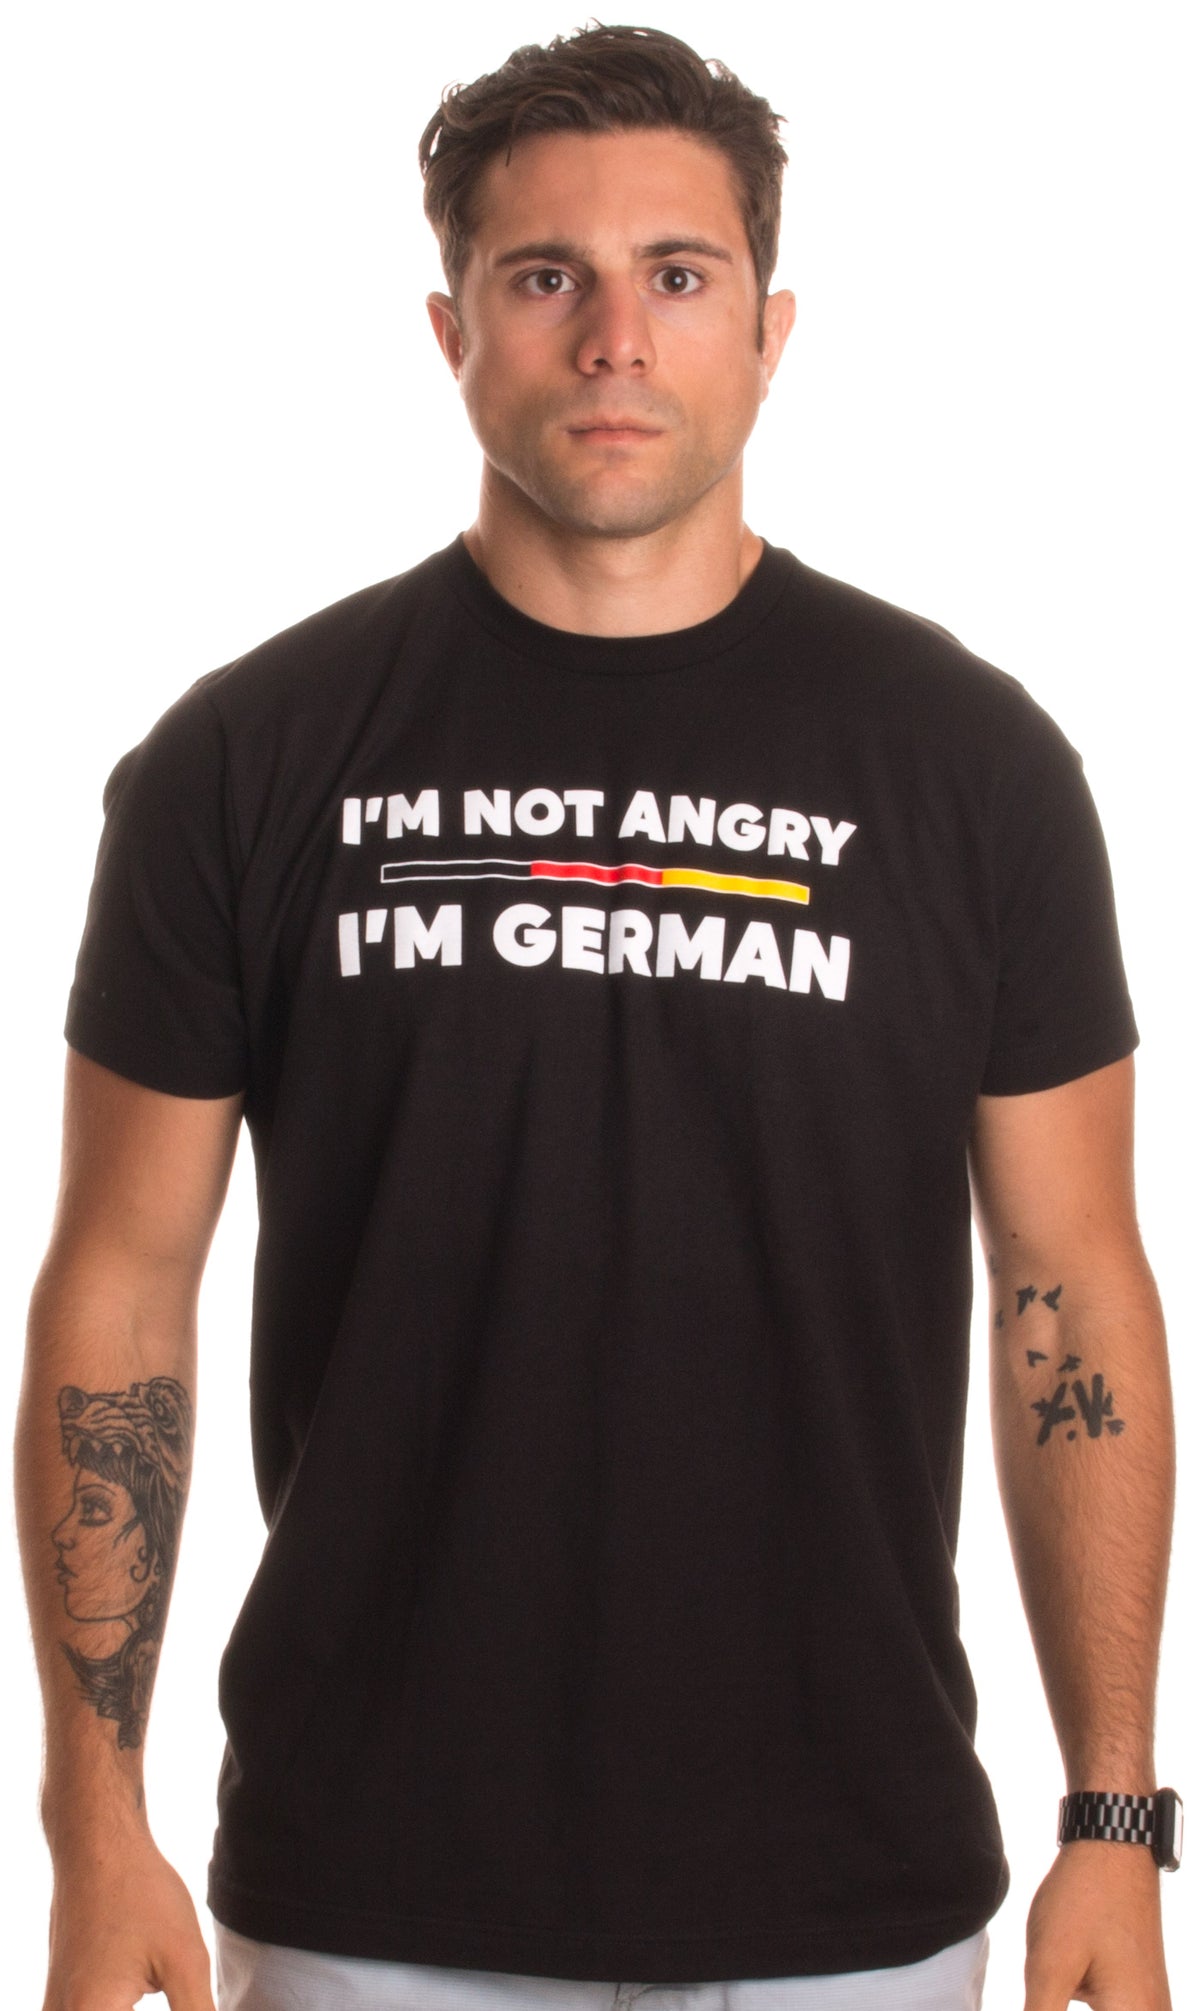 I'm not Angry, I'm German | Funny Germany Flag German-American Humor T-shirt